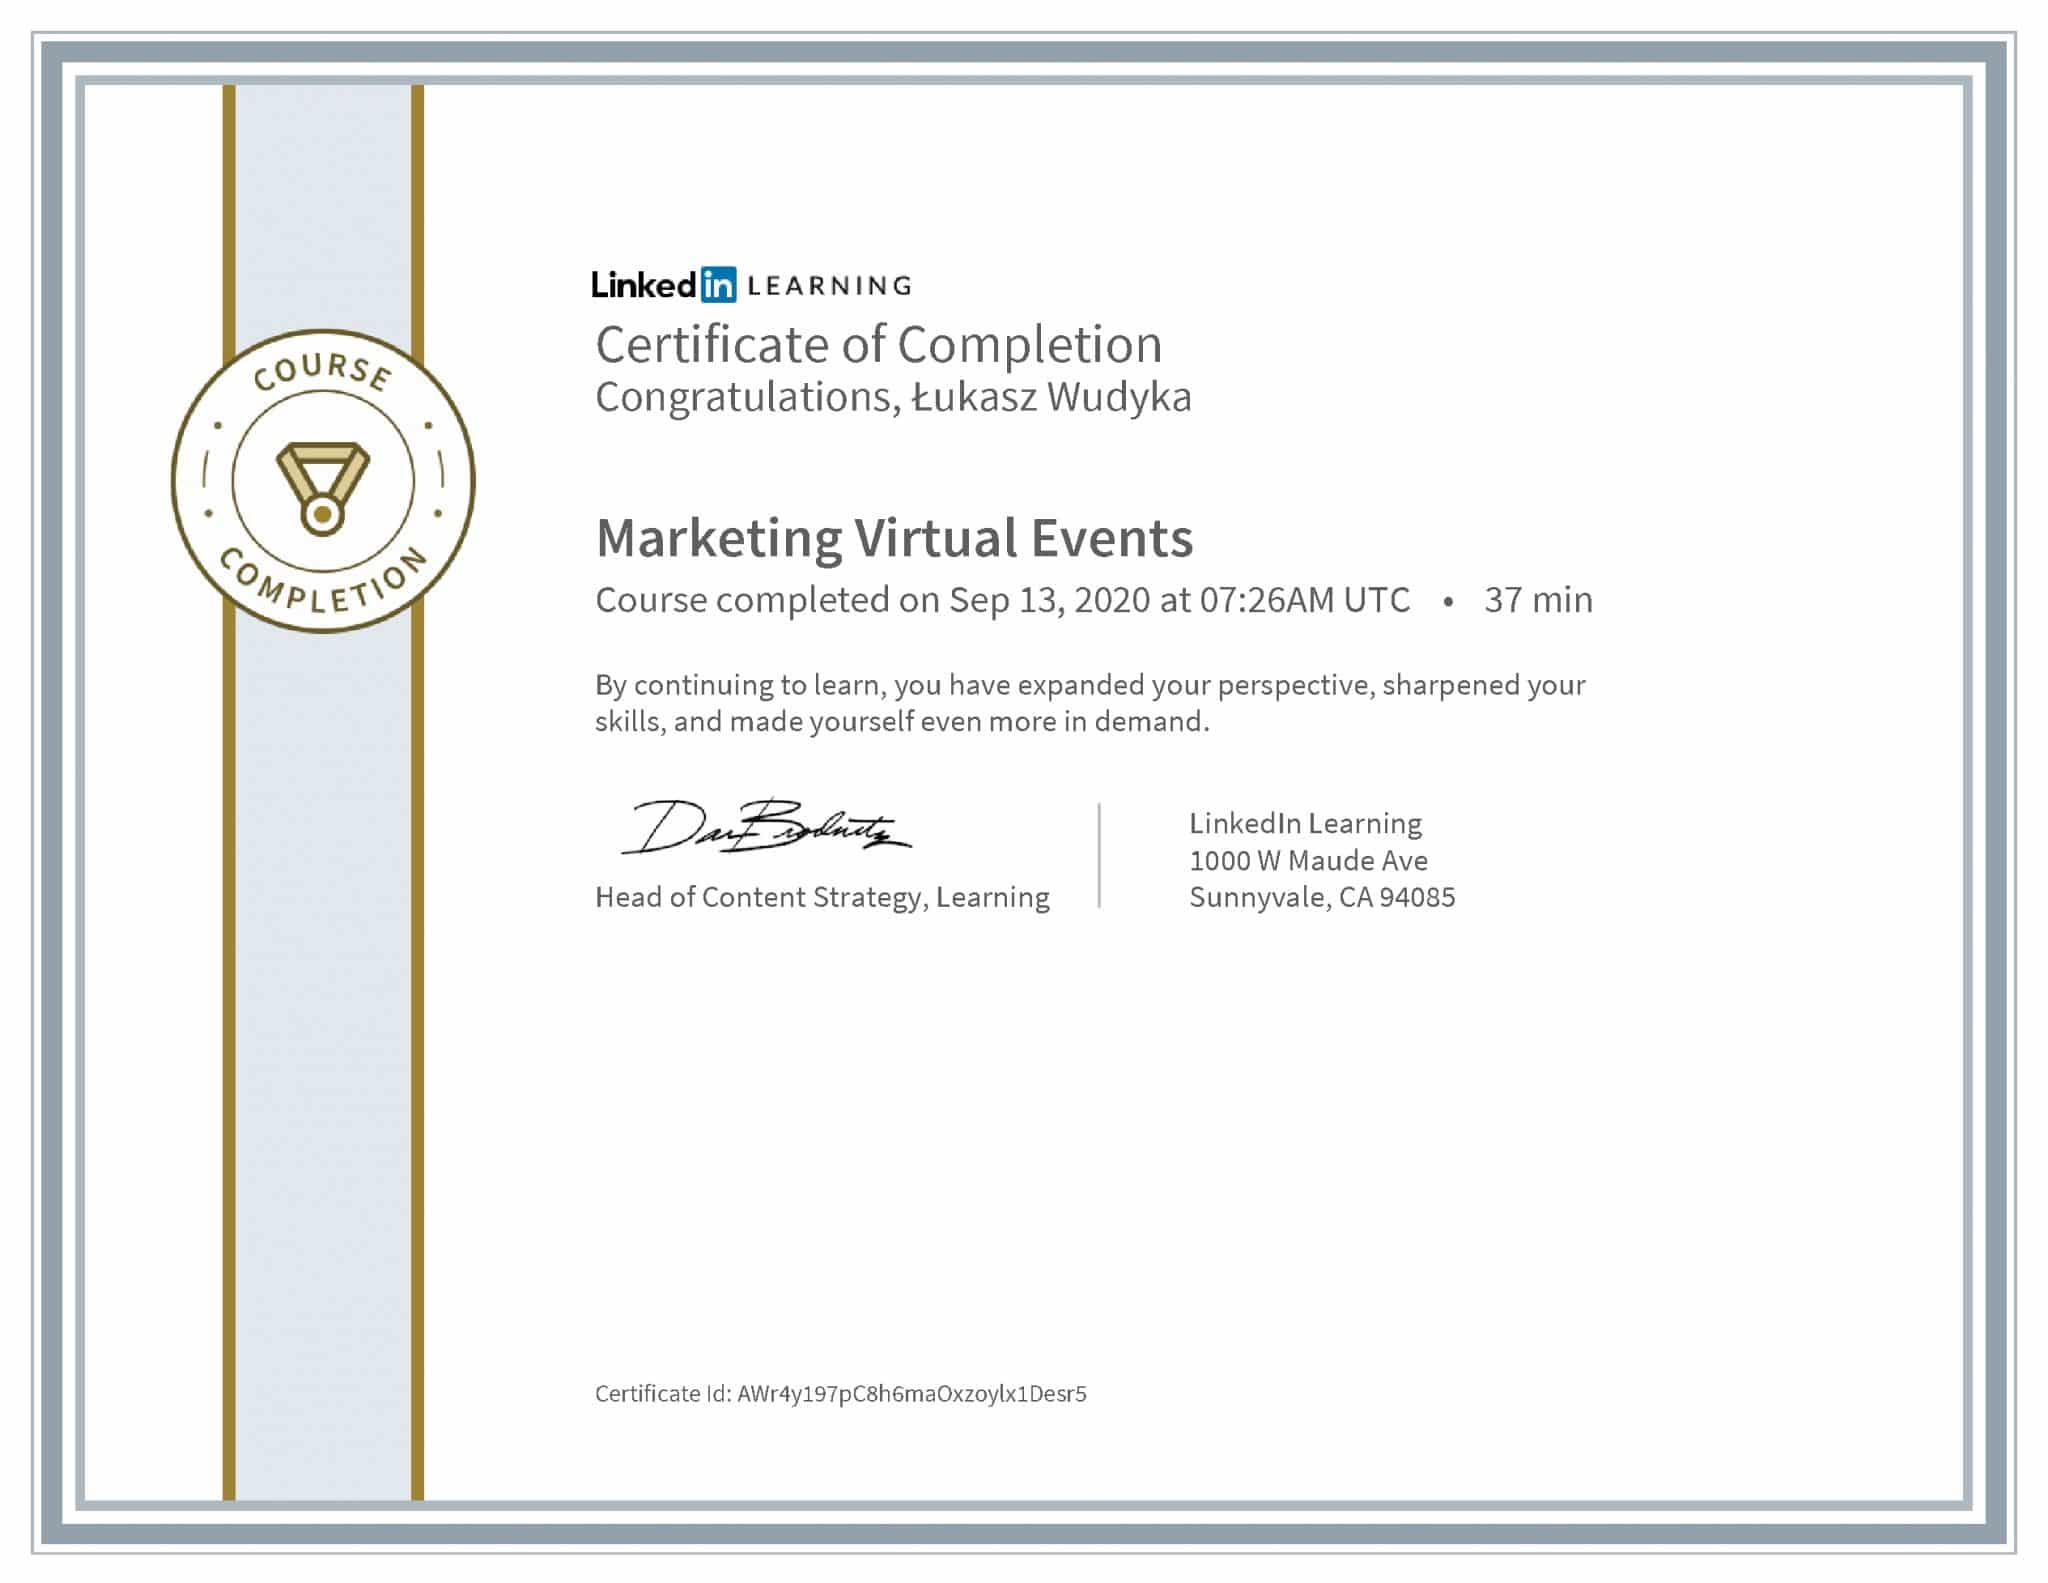 Łukasz Wudyka certyfikat LinkedIn Marketing Virtual Events